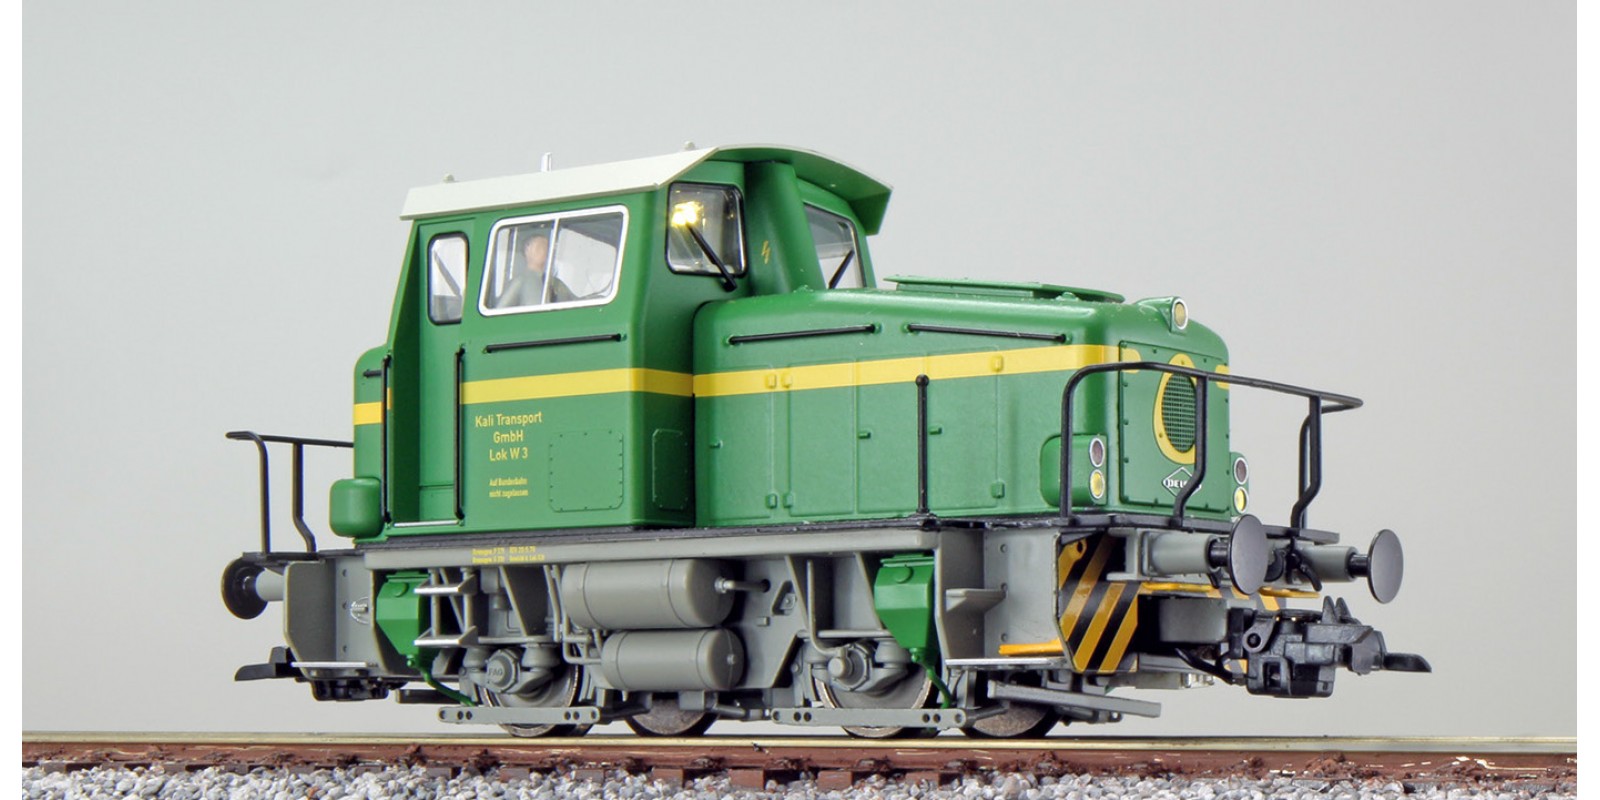 ES31440 Diesel locomotive, H0, KG 230 B, 3 Kali & Salz, green, Ep. IV, prototype condition around 1982, sound + smoke, shunting coupling, DC / AC